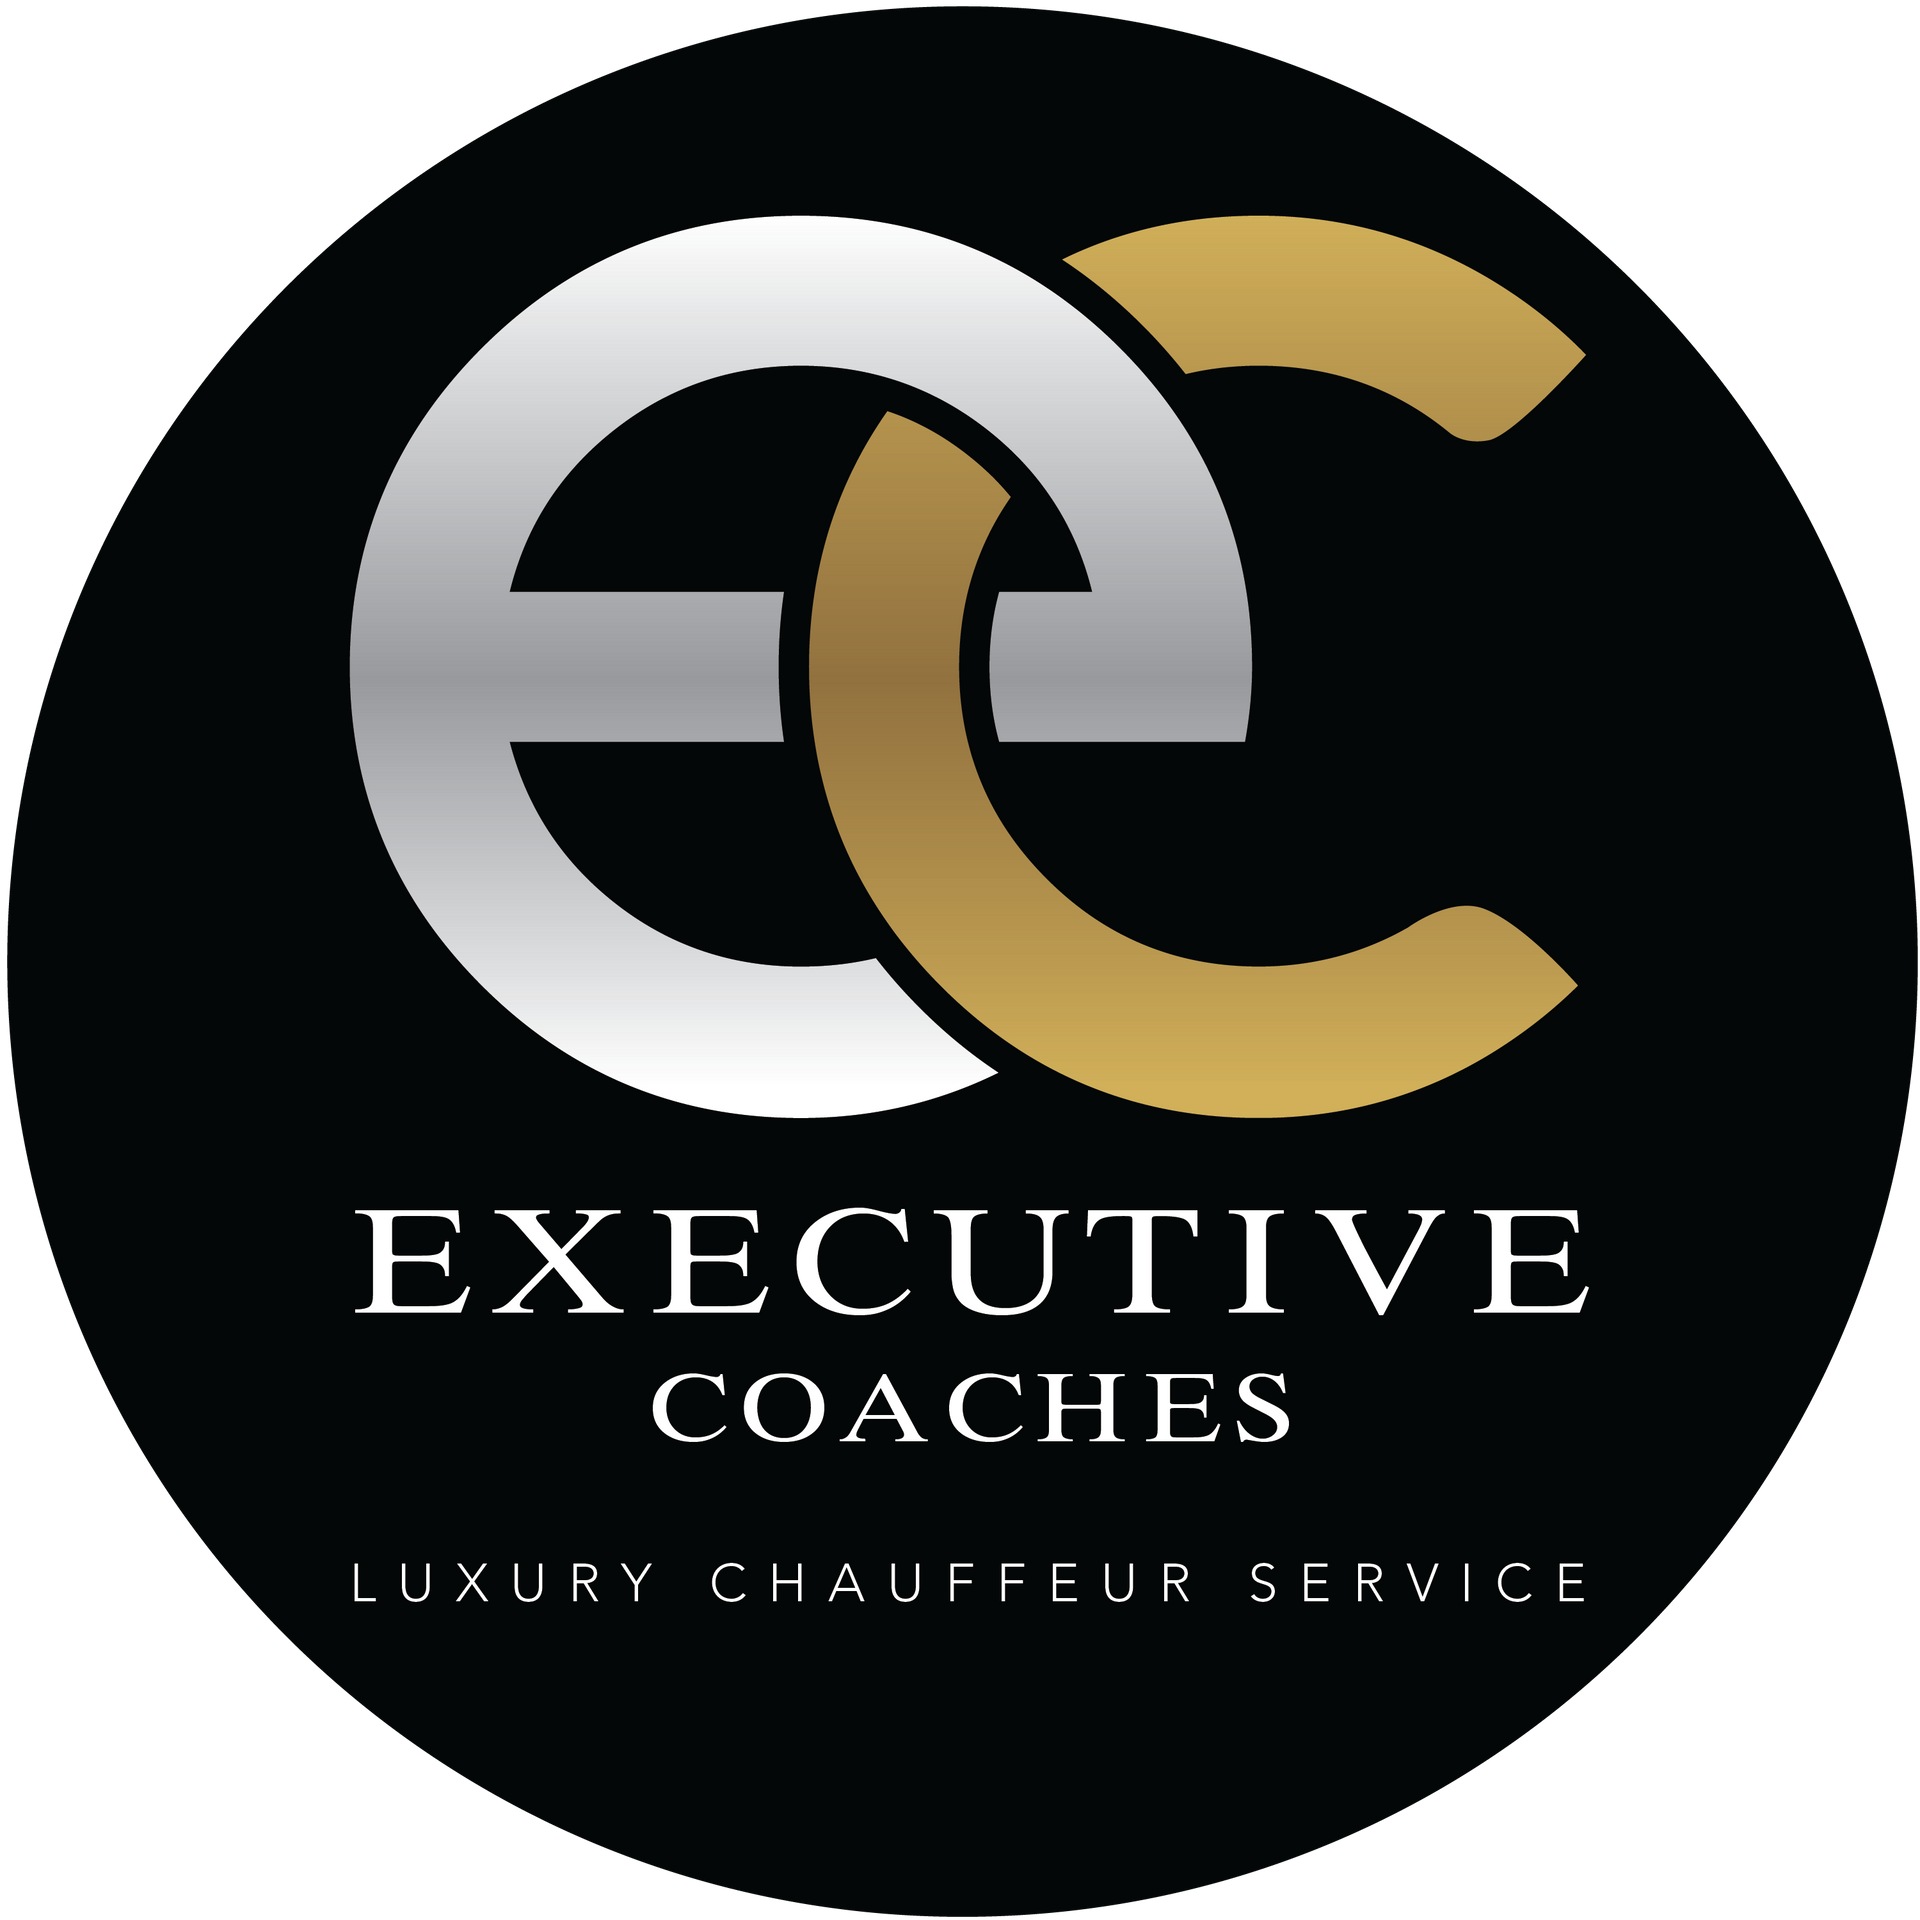 Executive Coaches Premium Chauffeur Service Memphis